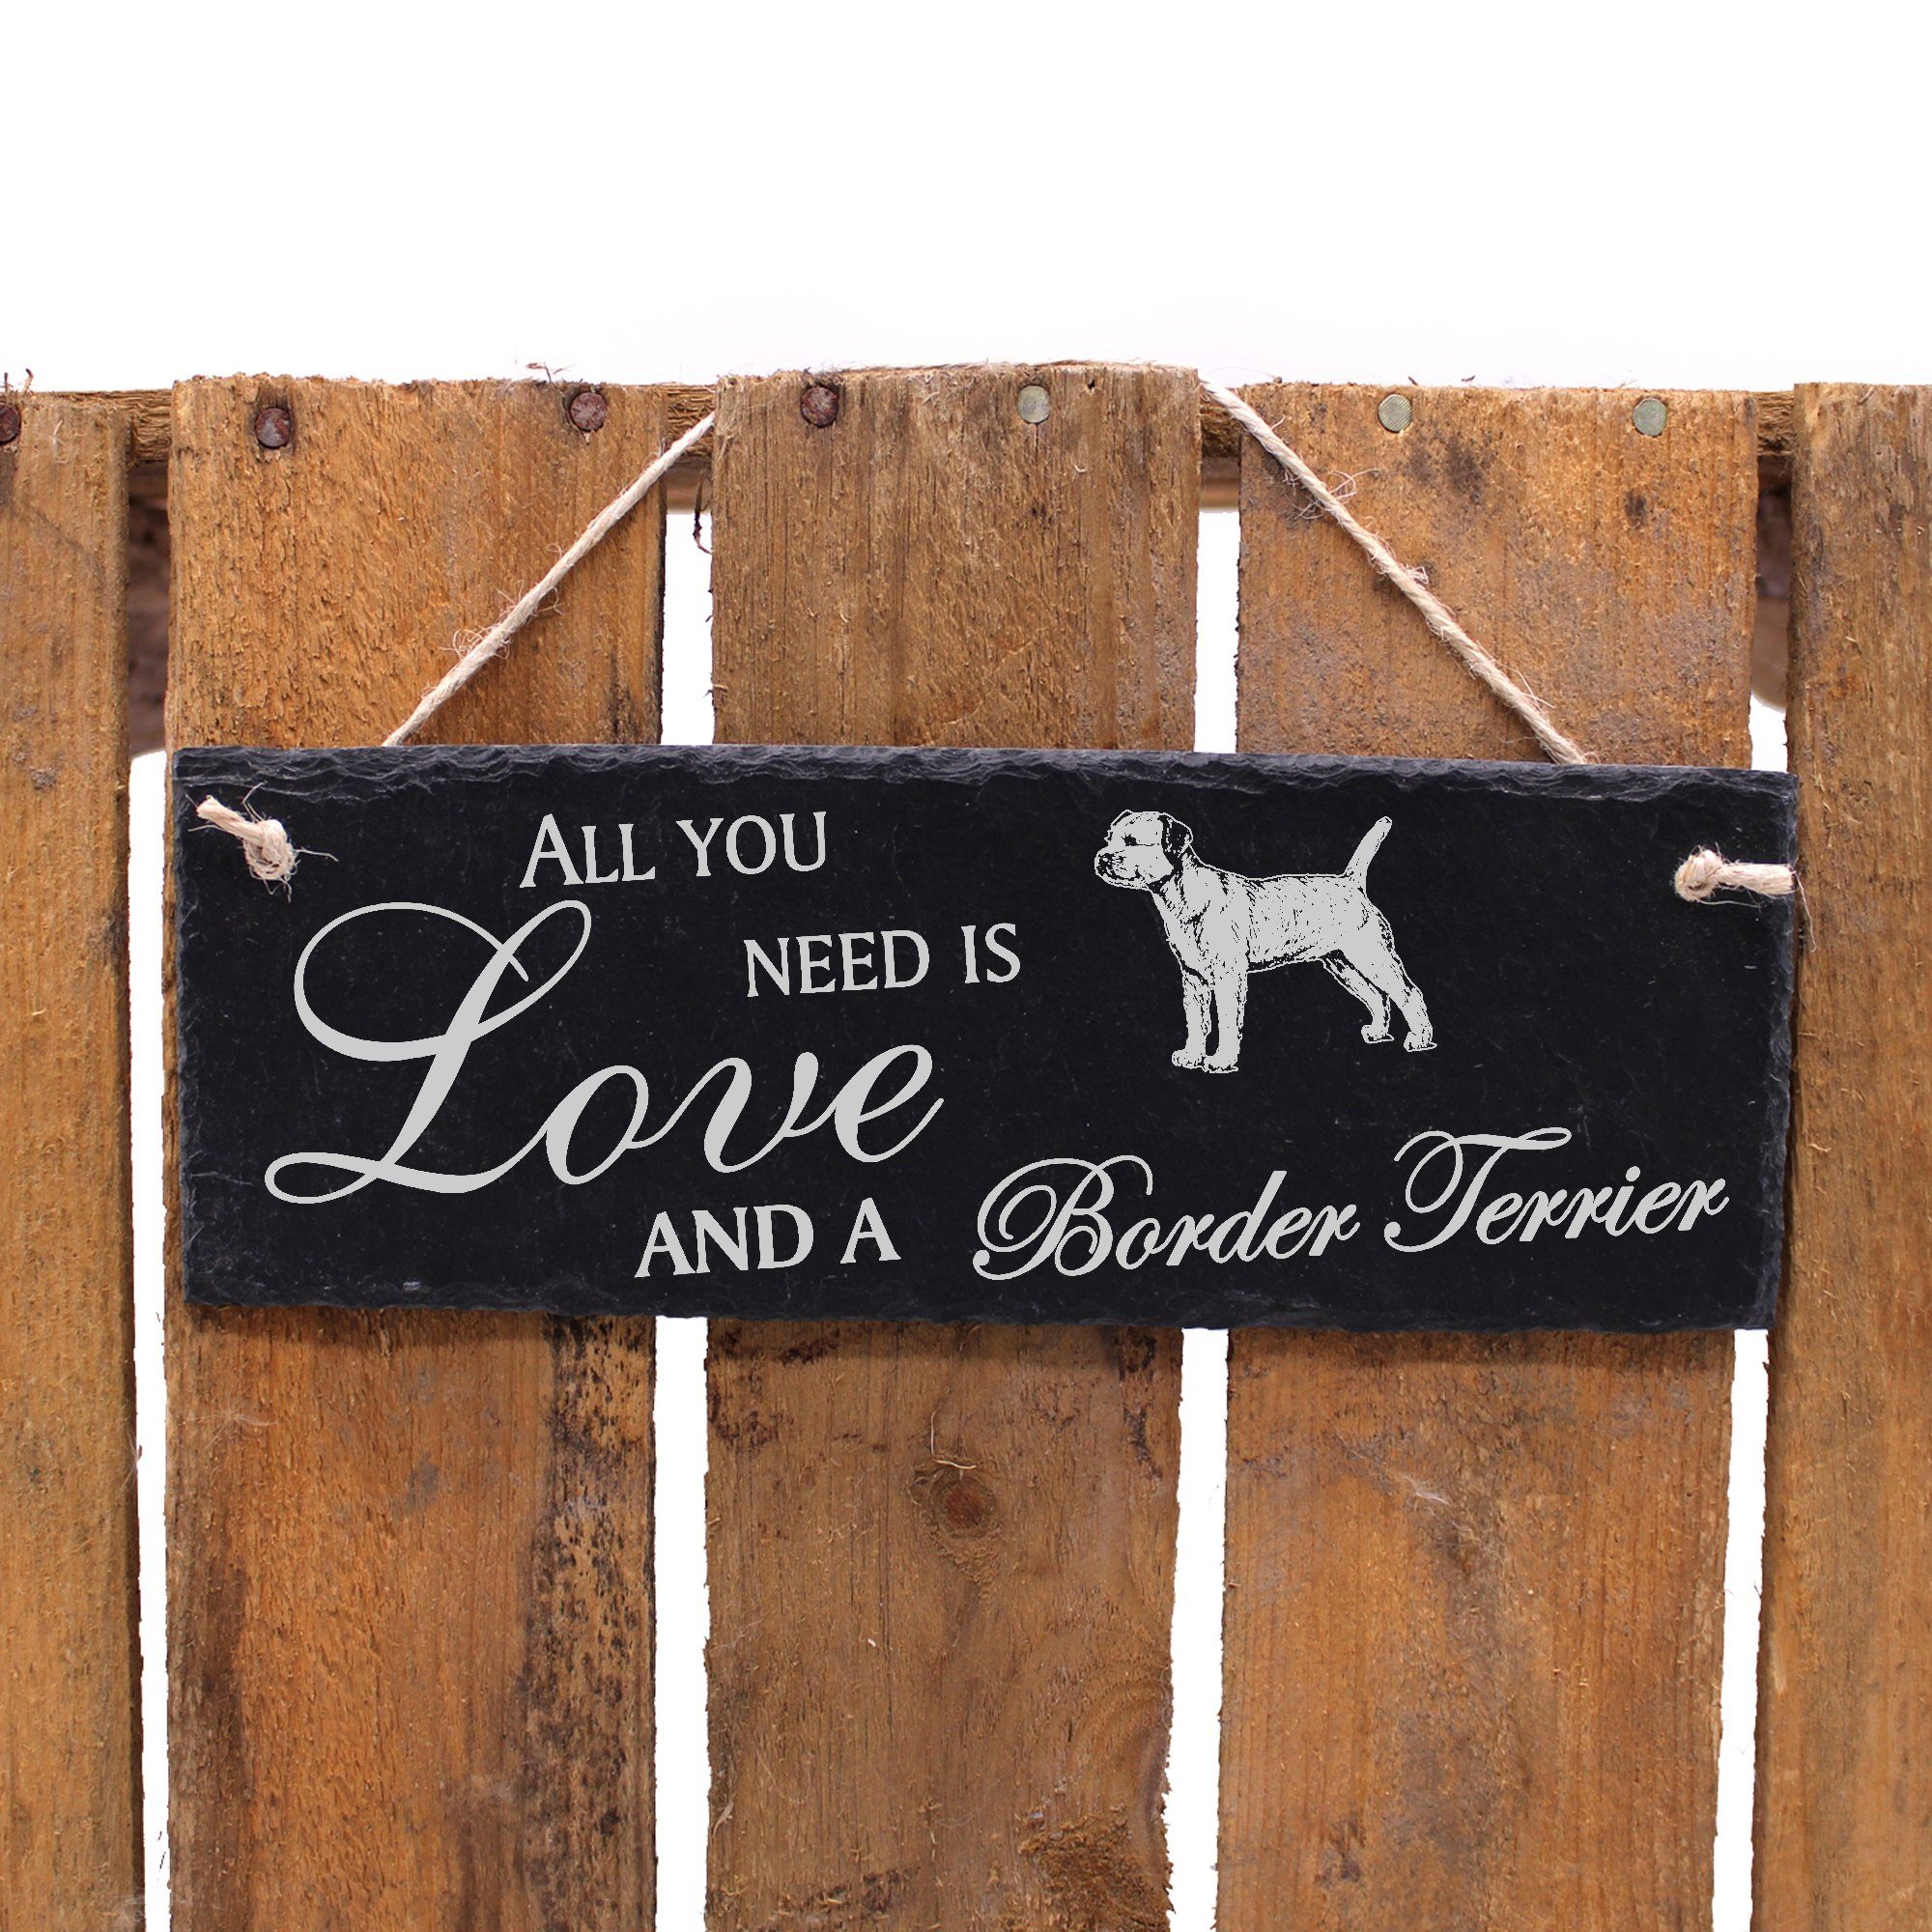 Border Border Terrier you Dekolando is Terrier Hängedekoration Love need All 22x8cm a and